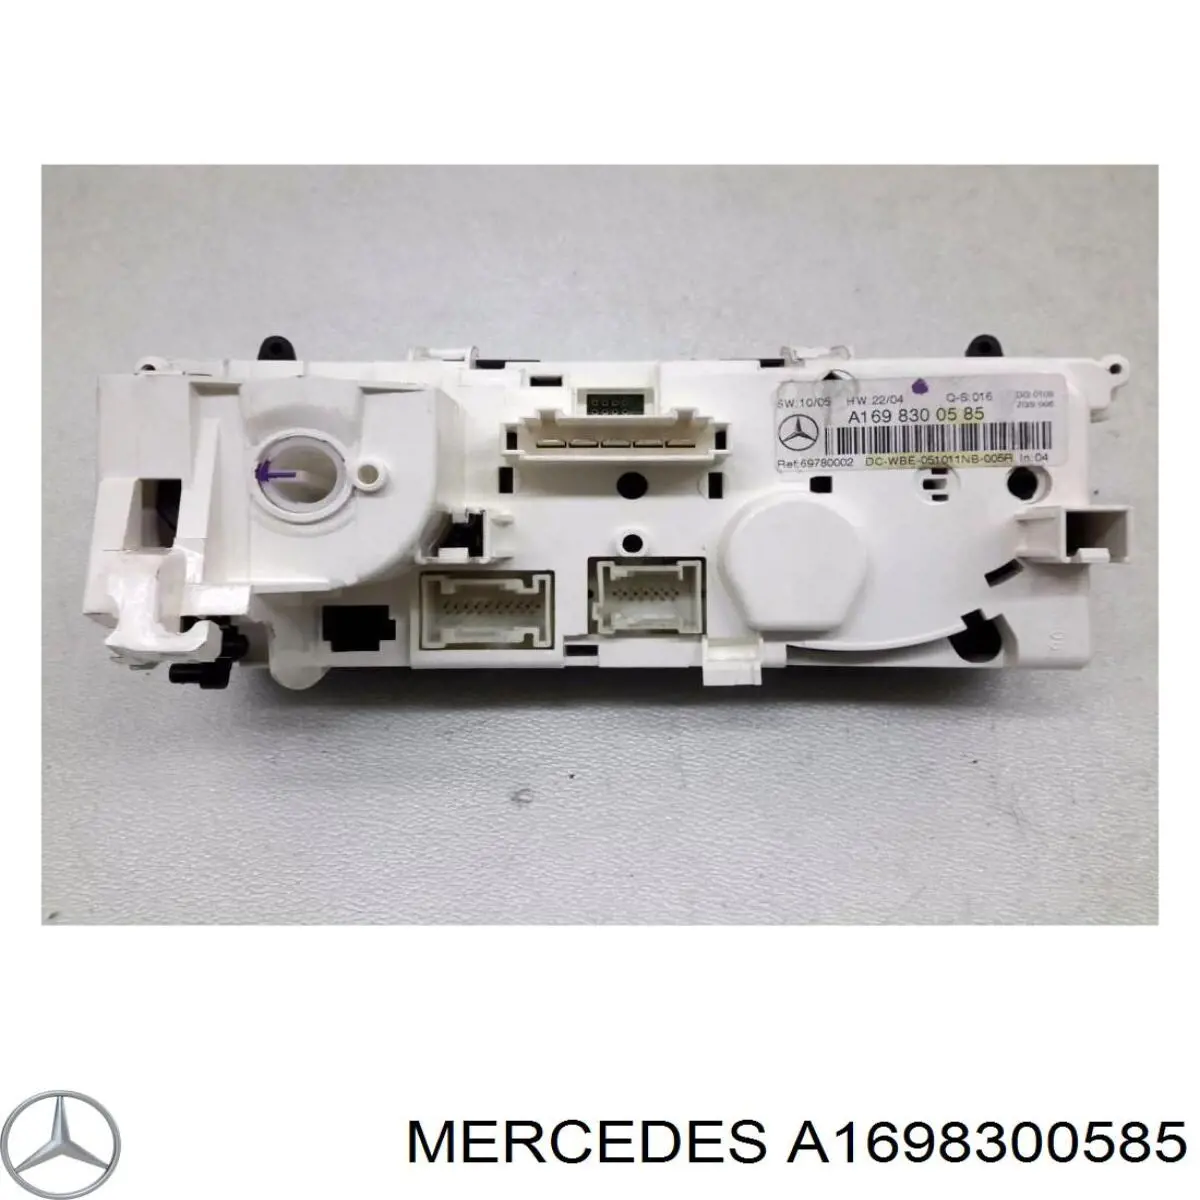 A1698300585 Mercedes unidade de controlo dos modos de aquecimento/condicionamento